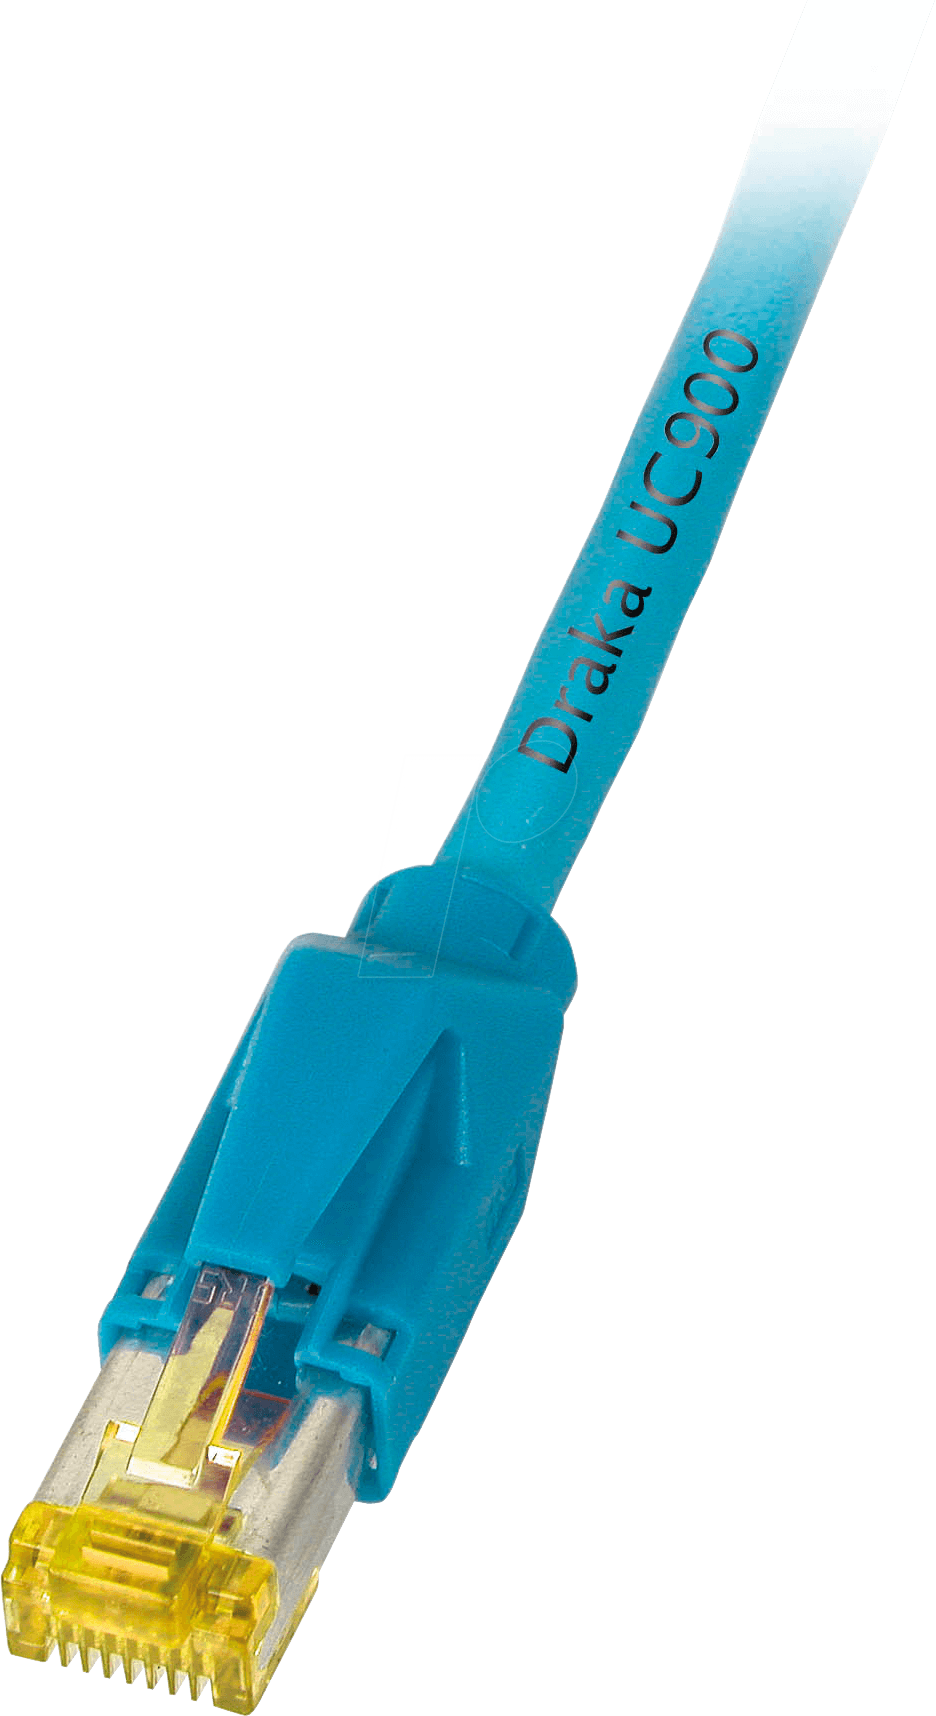 PATCH-TM31 30BL - Patchkabel TM31 S/FTP UC900MHz, blau, 30 m von EFB-ELEKTRONIK